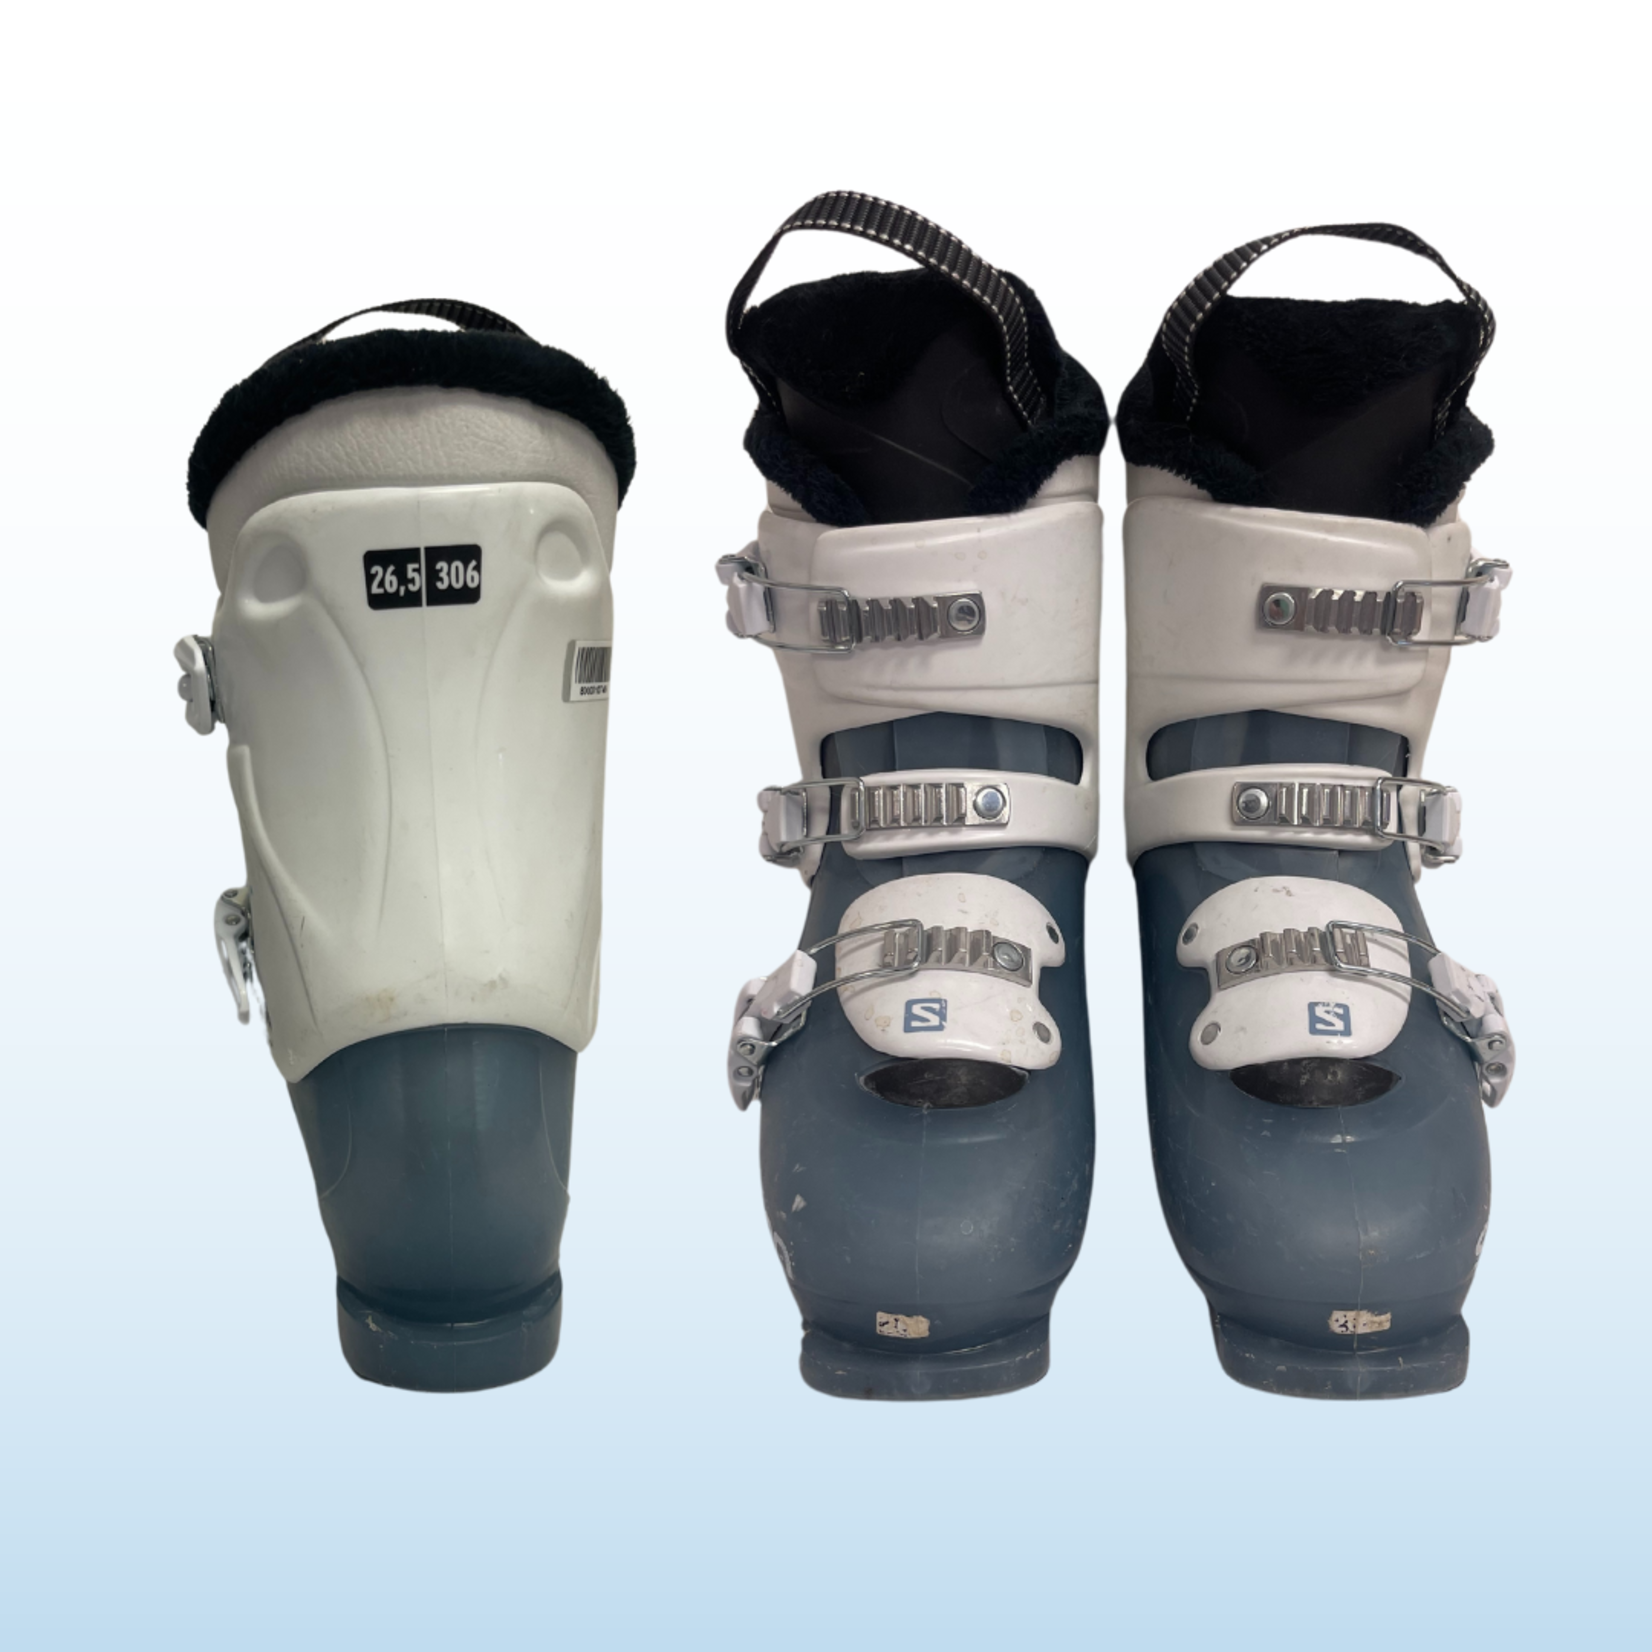 Salomon Salomon T3 Kids Ski Boots - Light Blue, Size 26.5